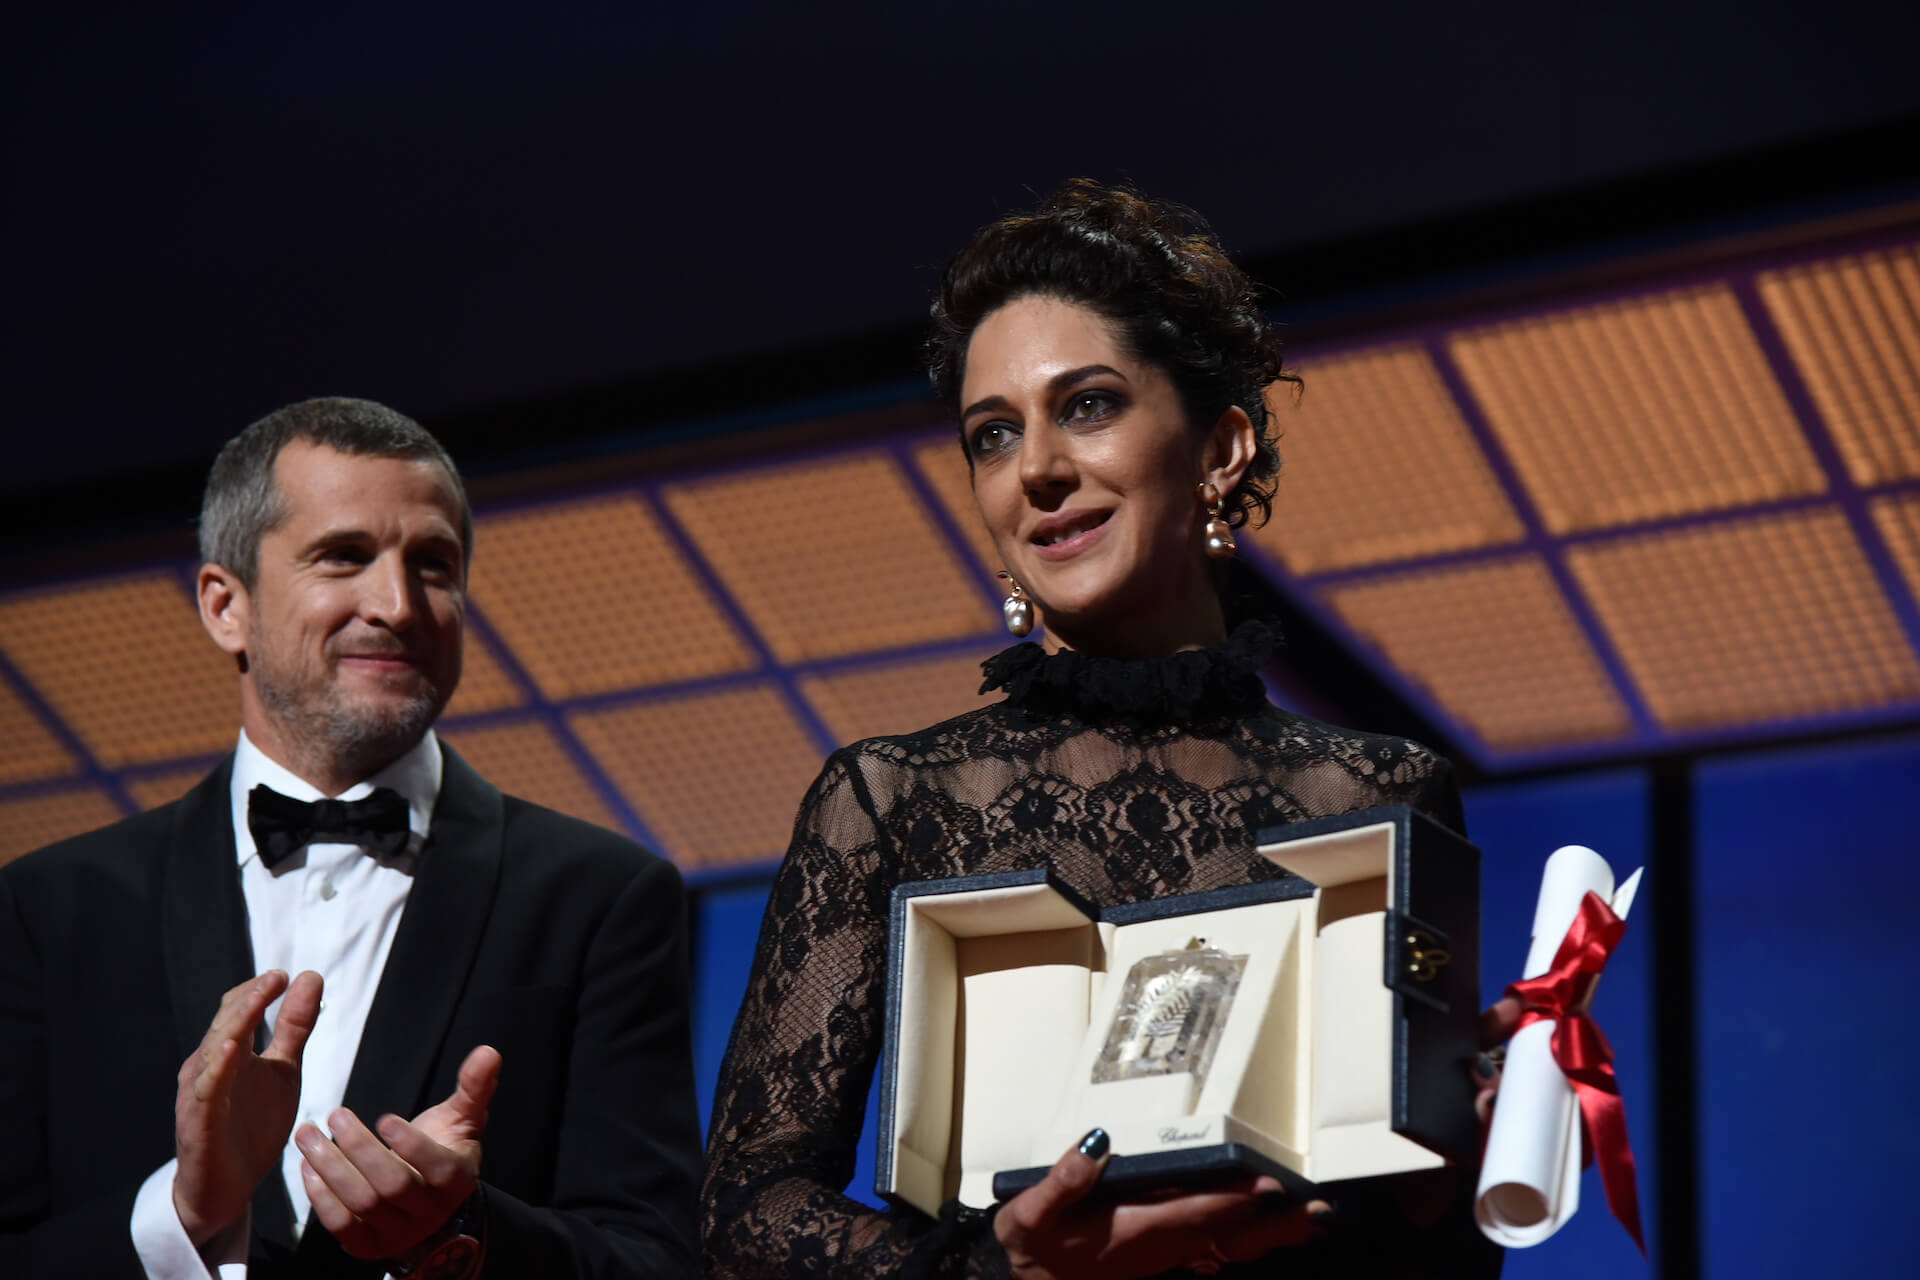 Award for Best Actress - Zar Amir Ebrahimi